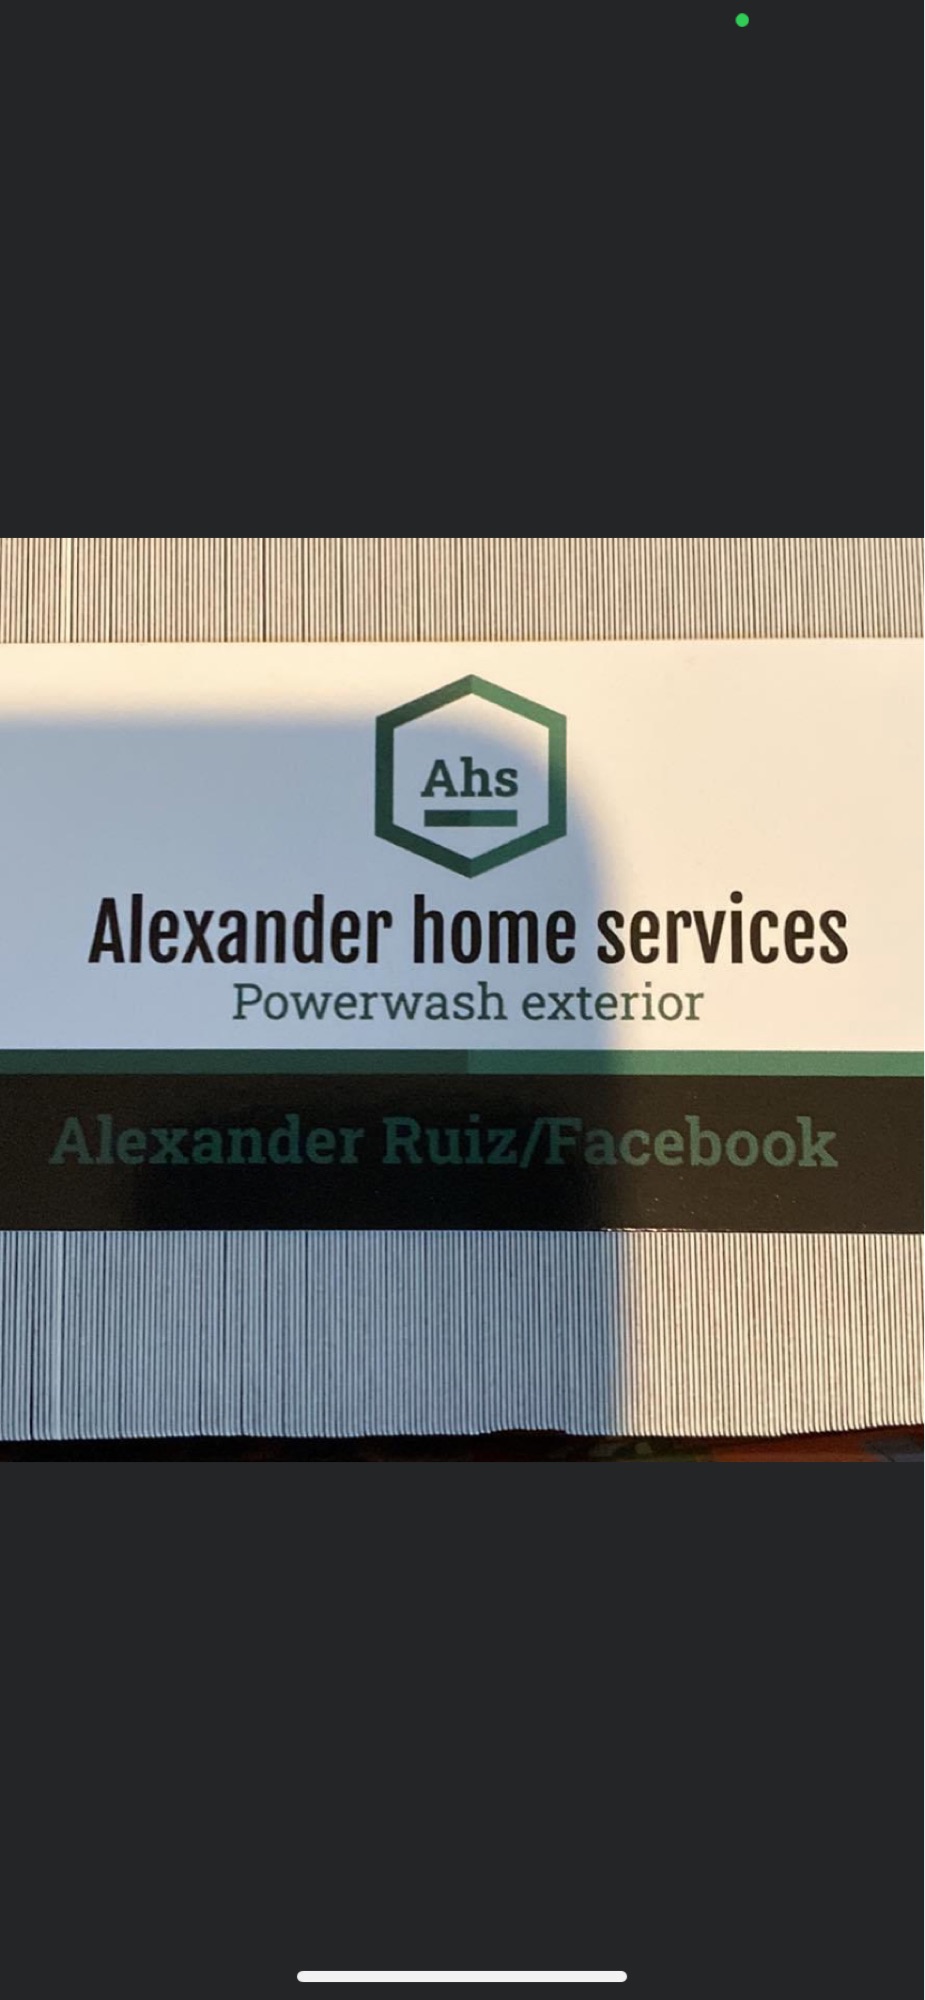 Alexanders Home Services Logo